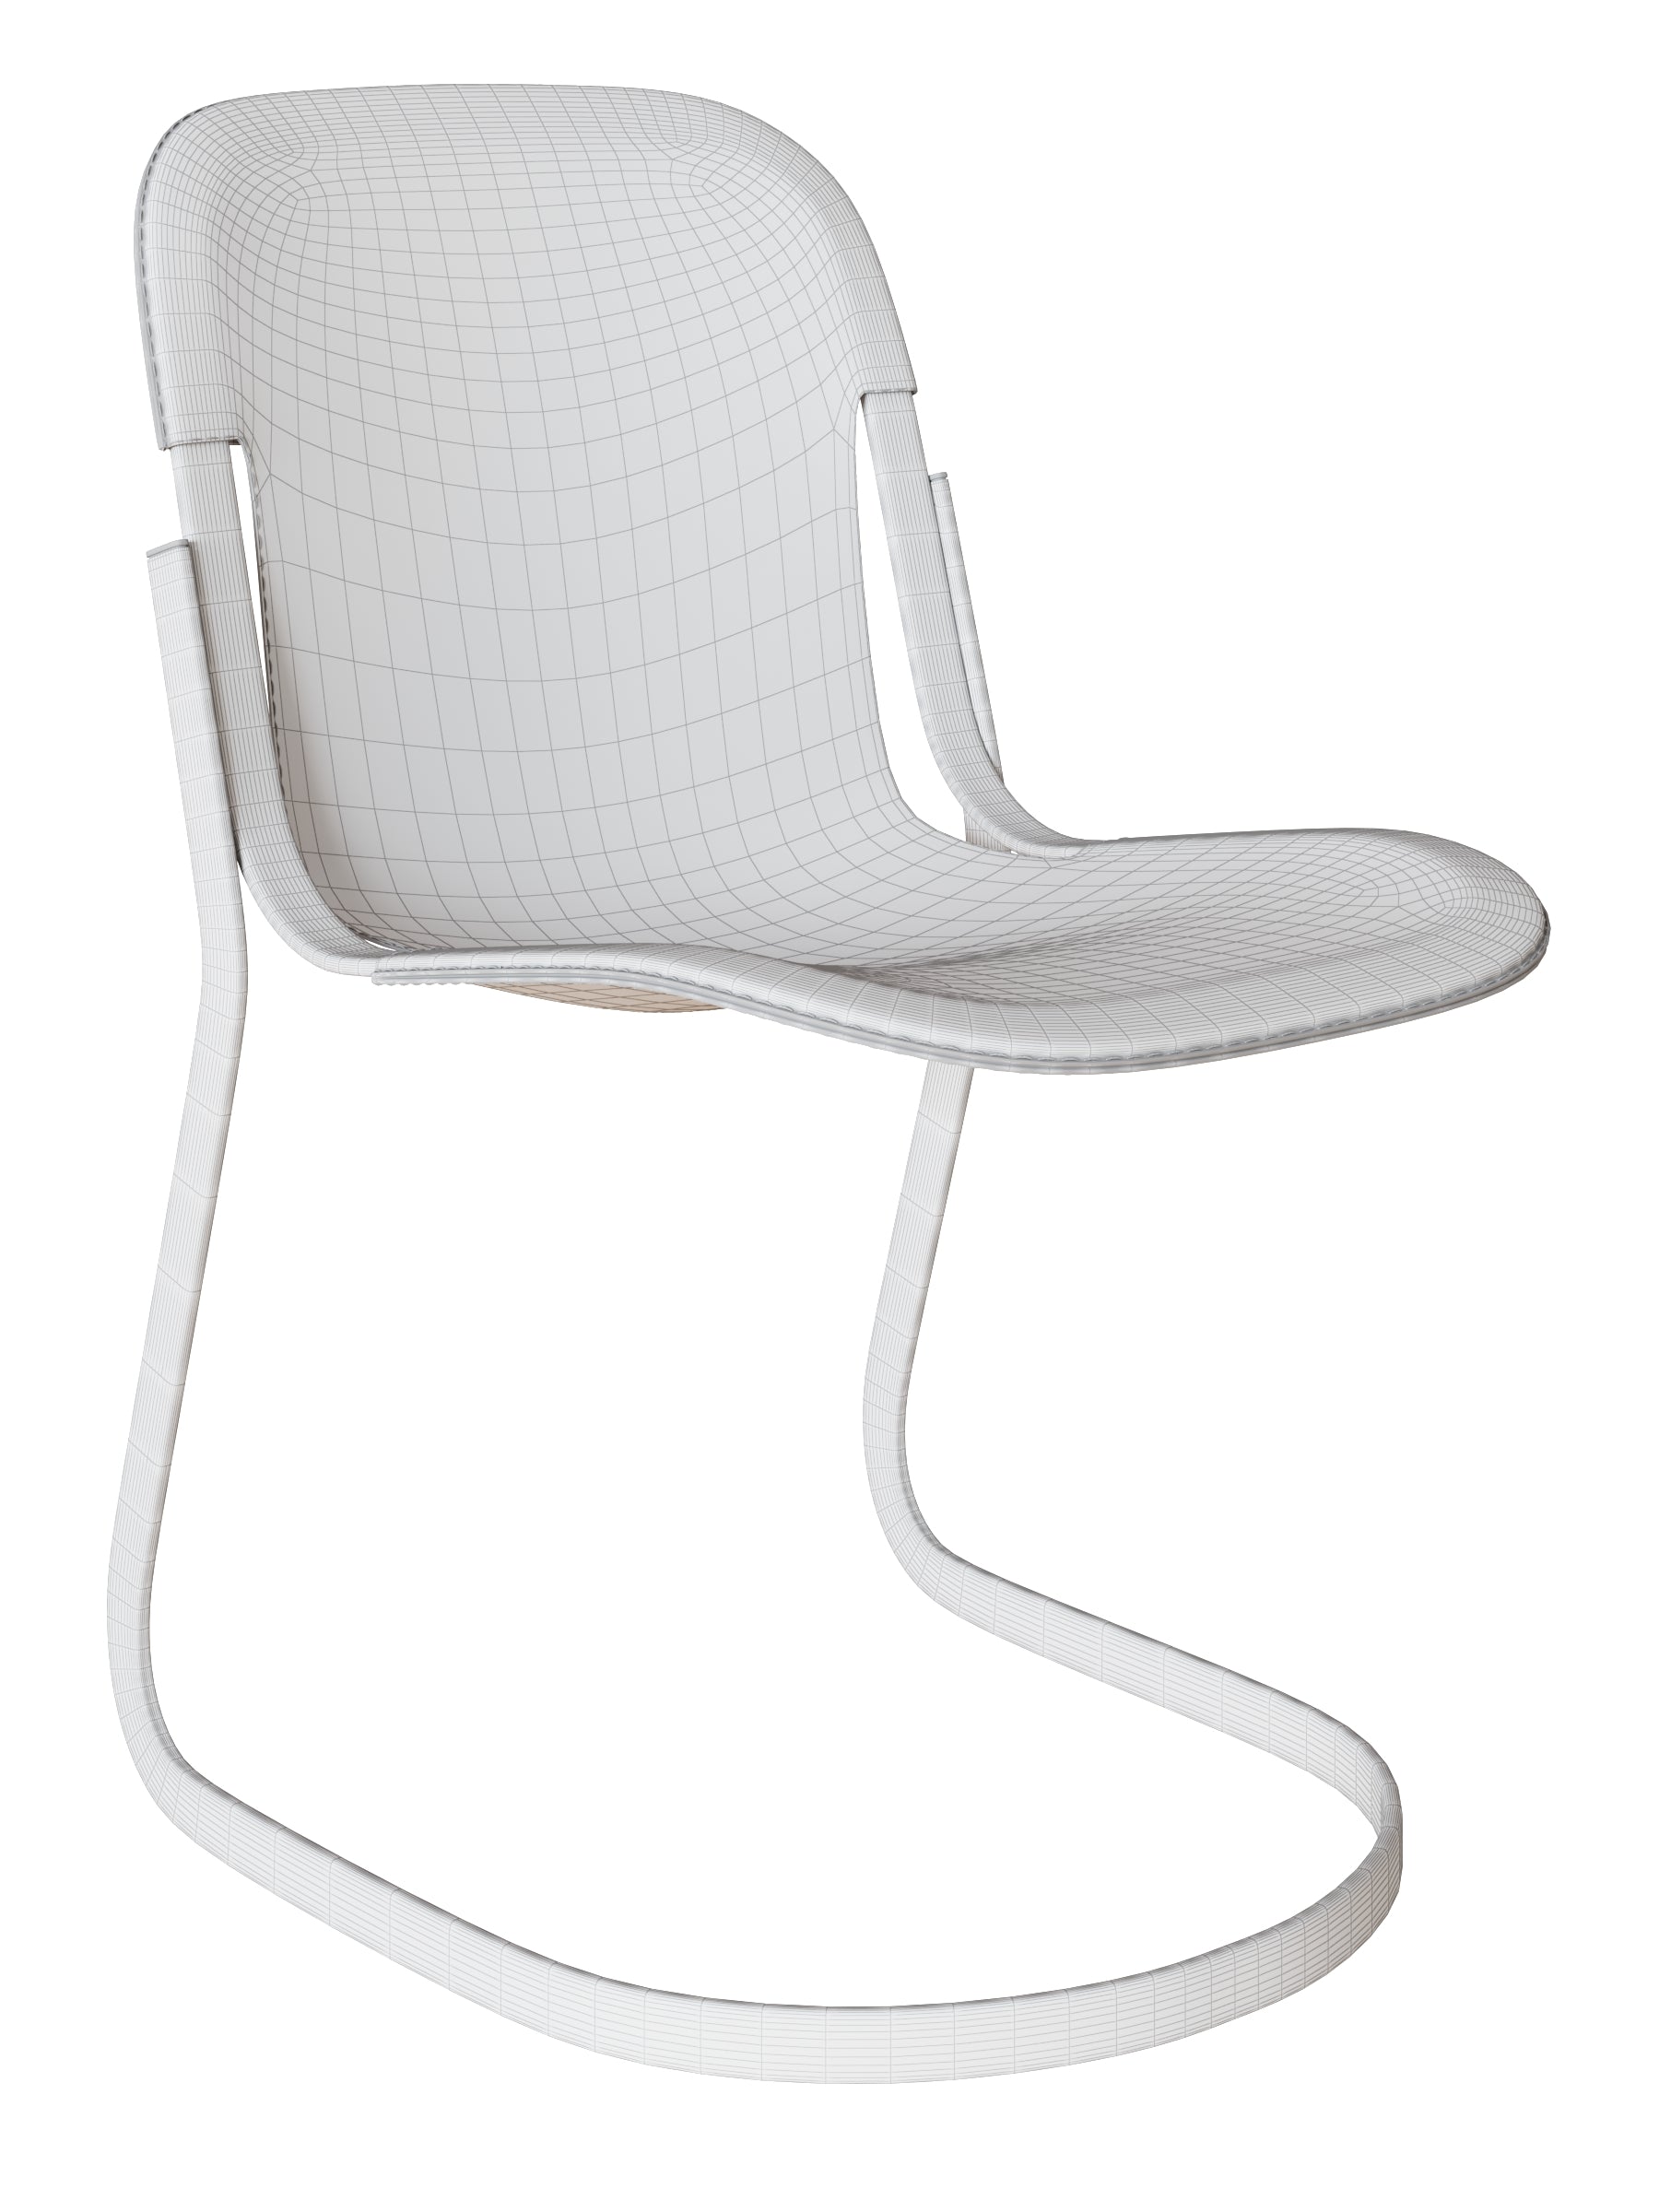 Willy-Rizzo-Chair-Mesh-3DModel-by-KrievoStore